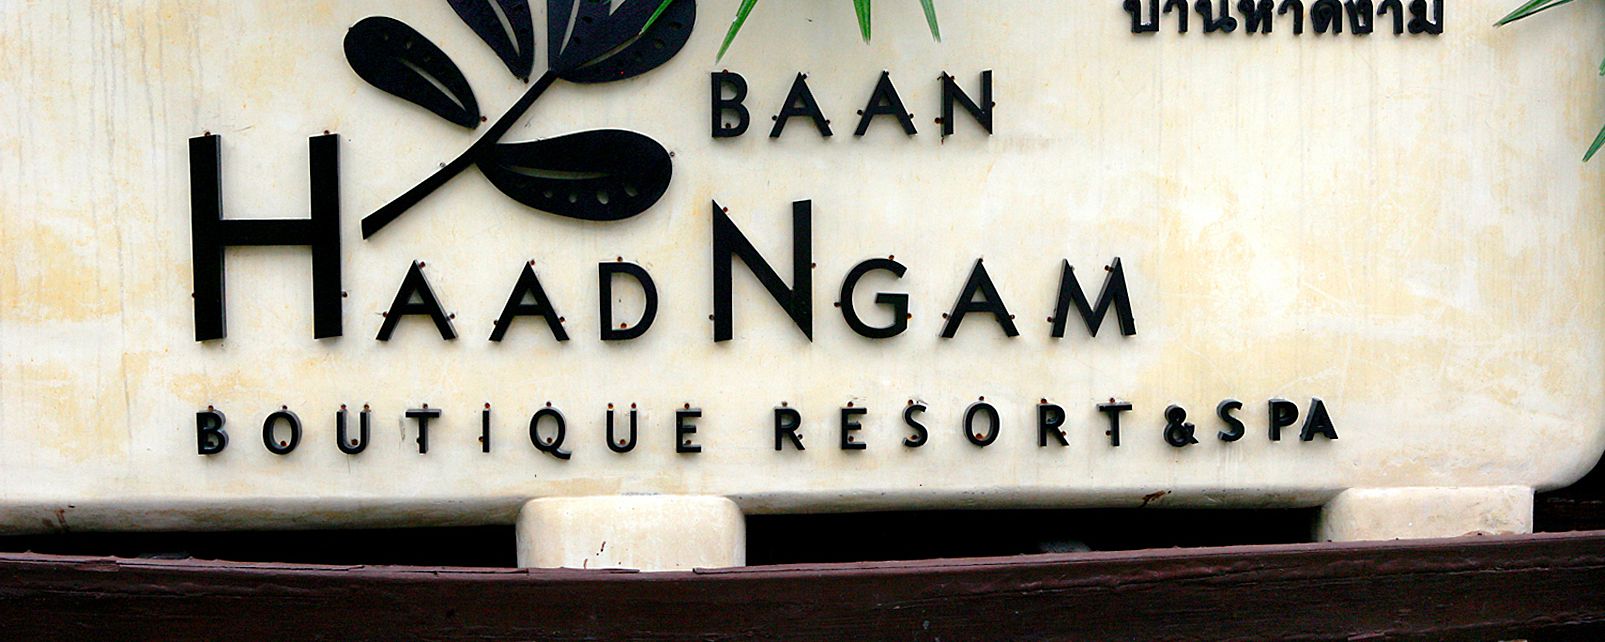 Hotel Baan Haad Ngnam Boutique